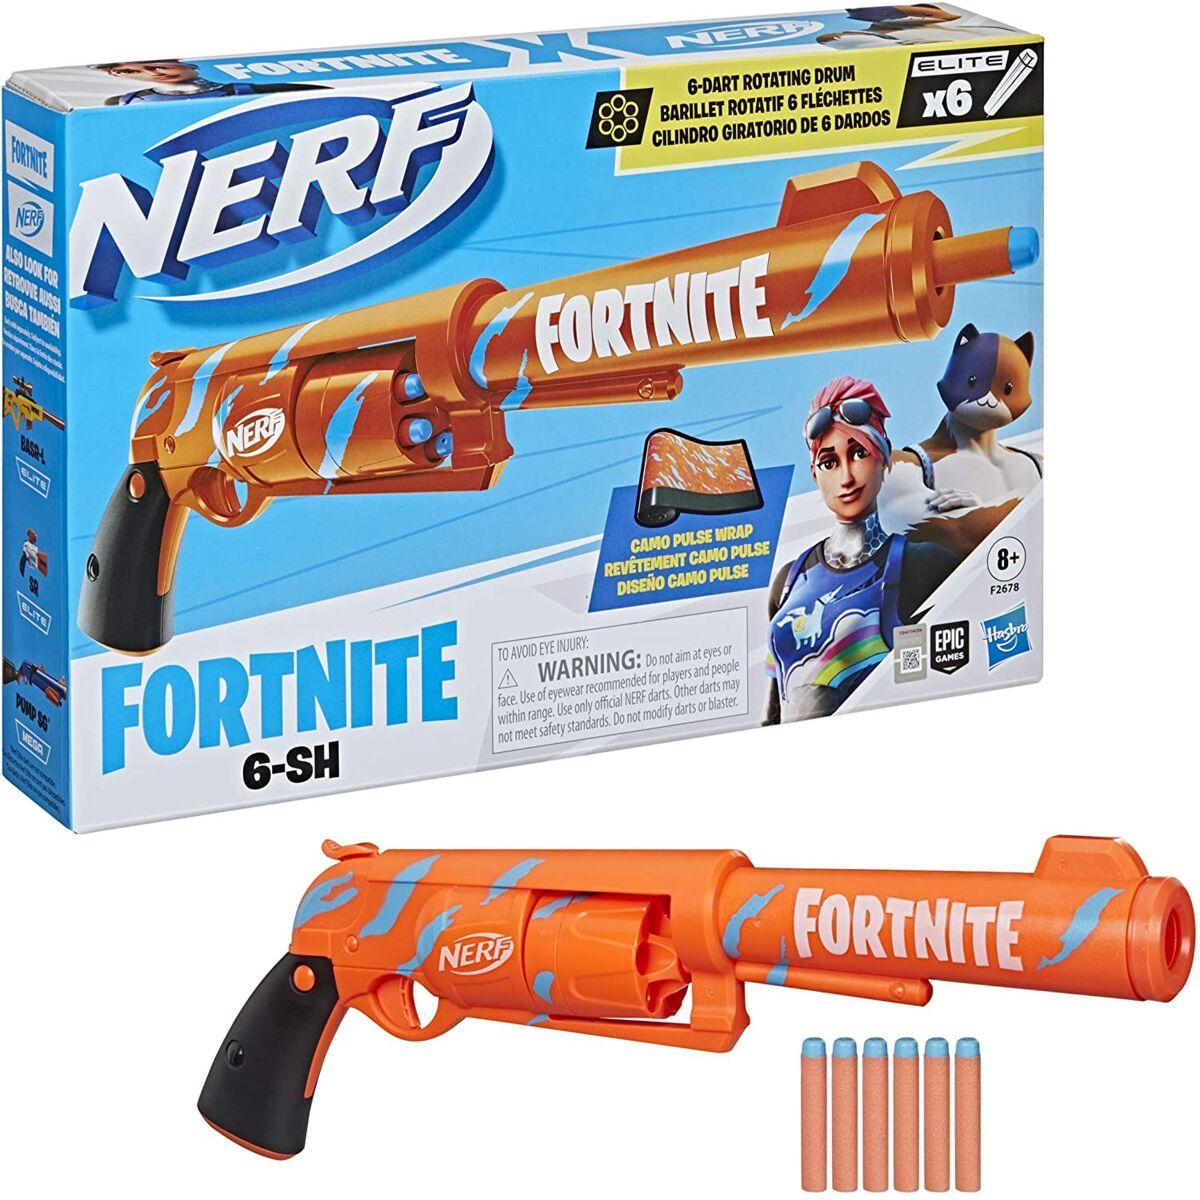 Nerf: Fortnite. 6-SH